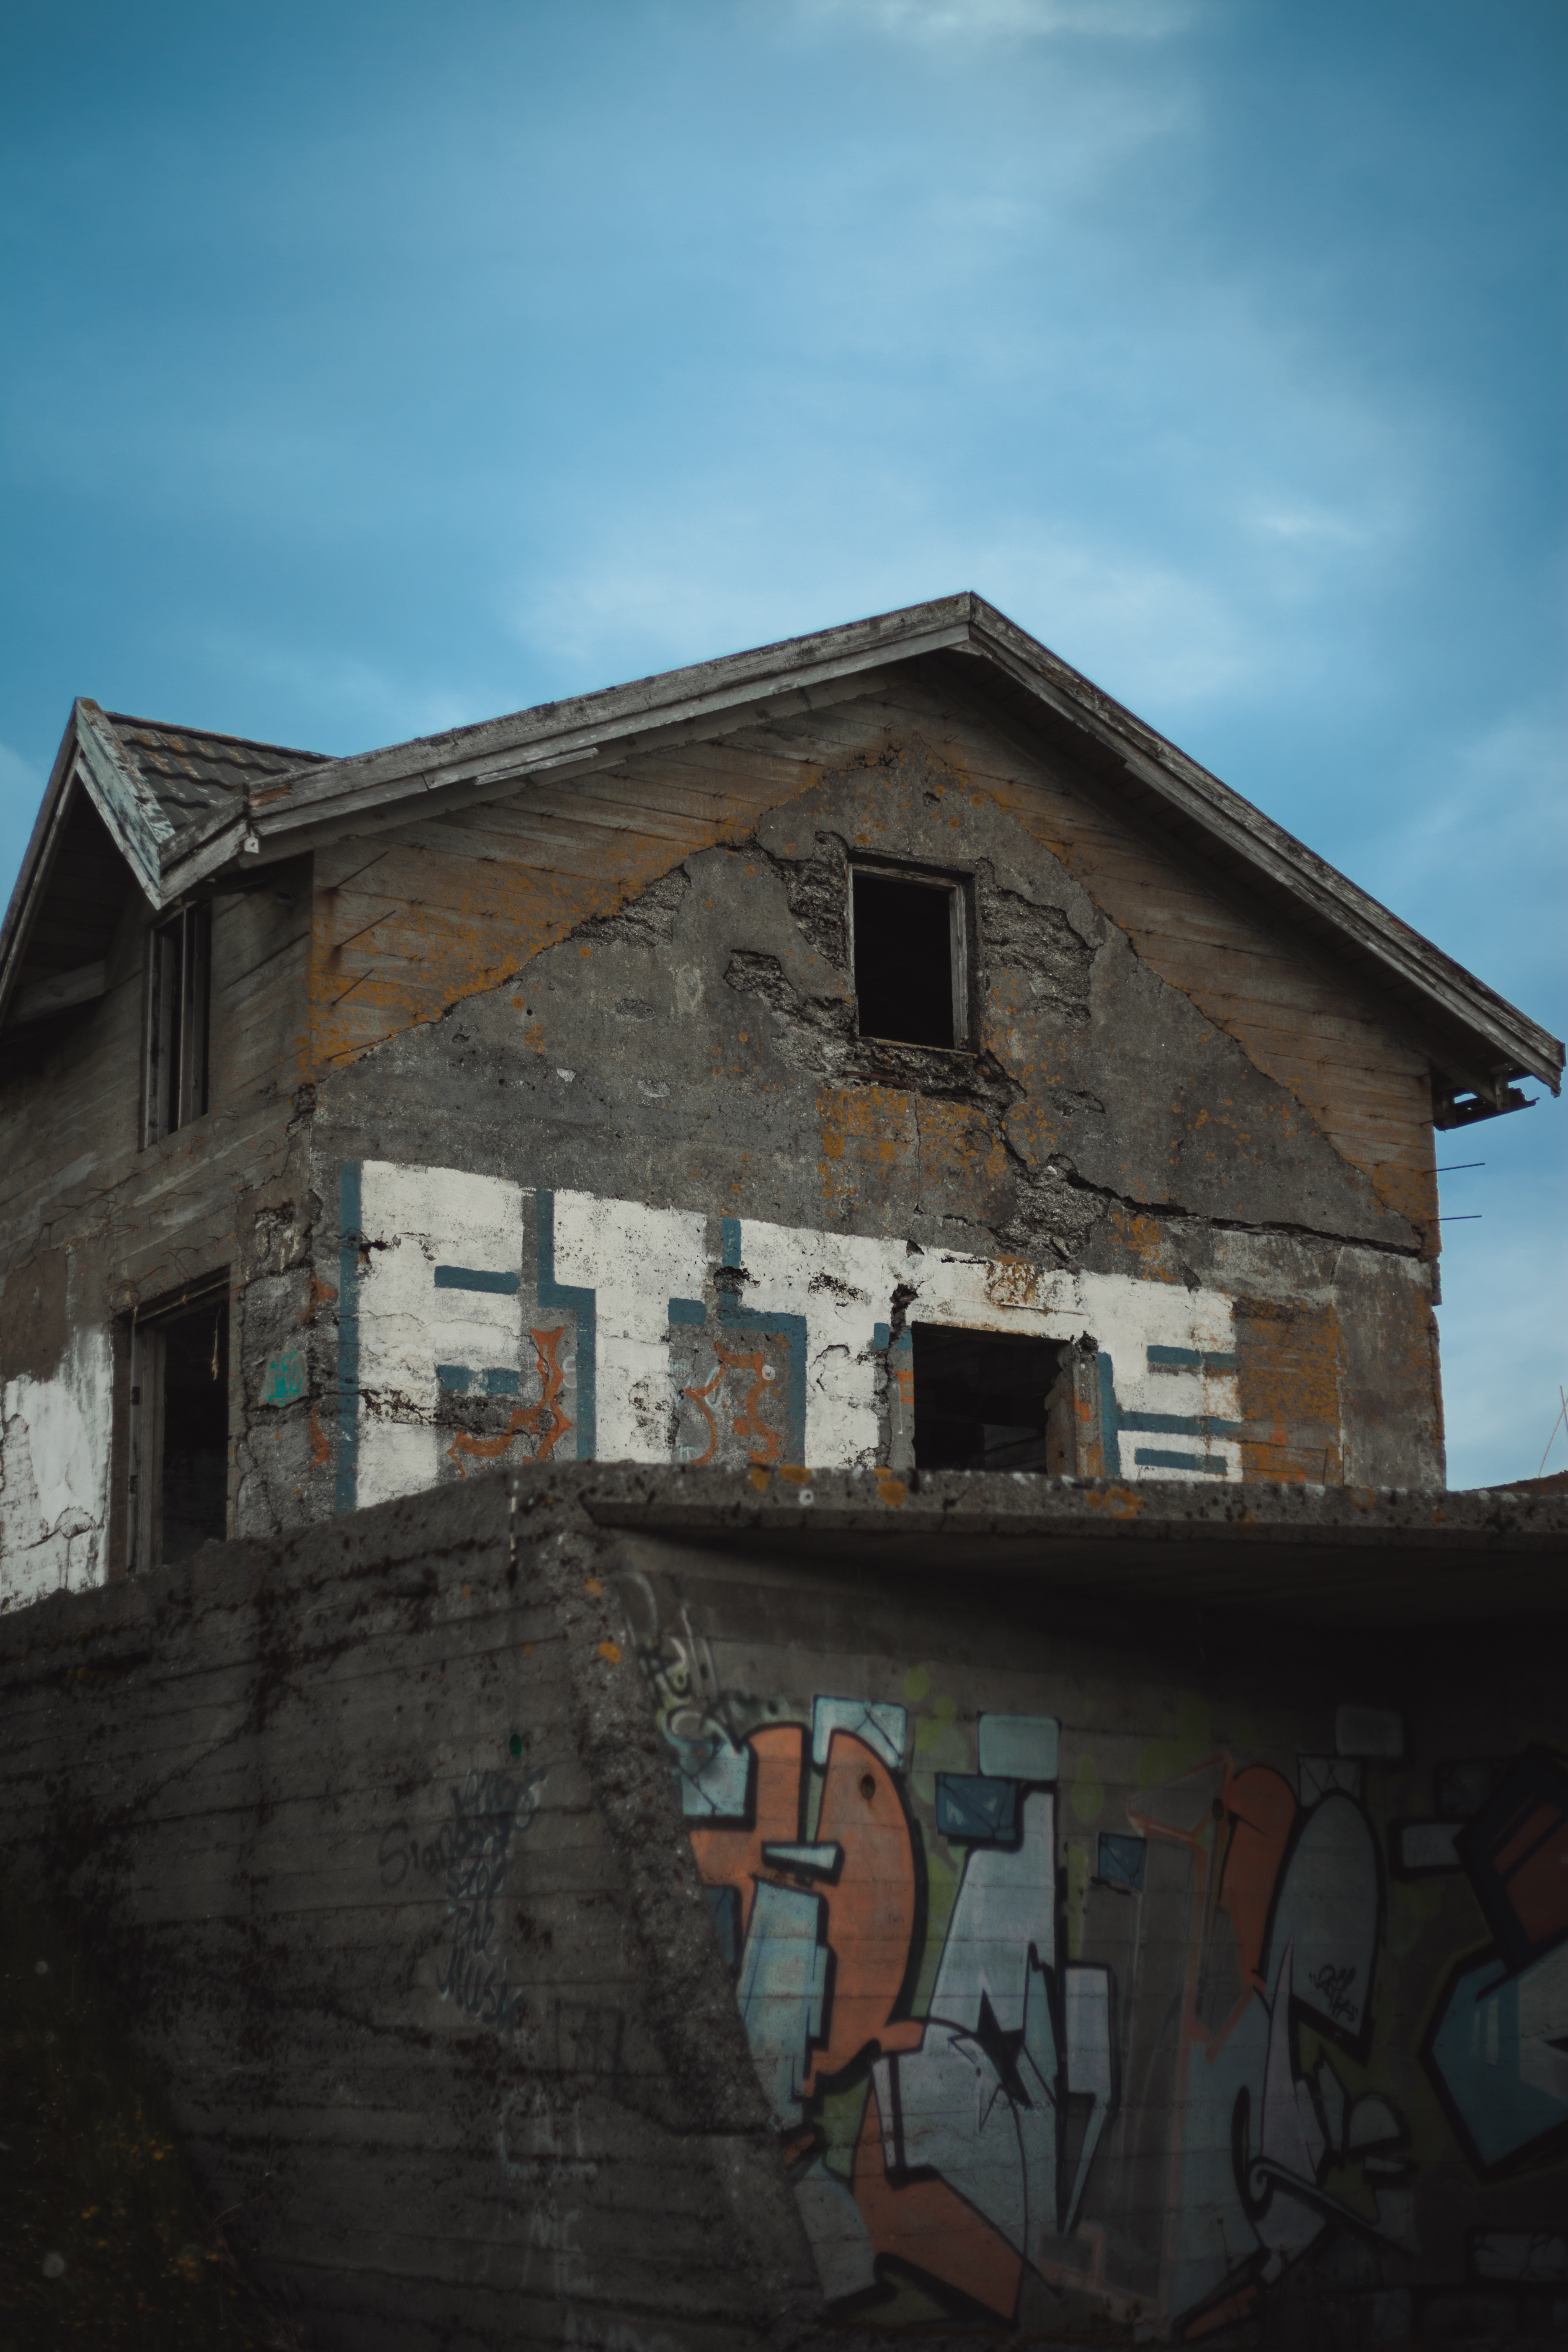 Abandoned house with graffiti photo